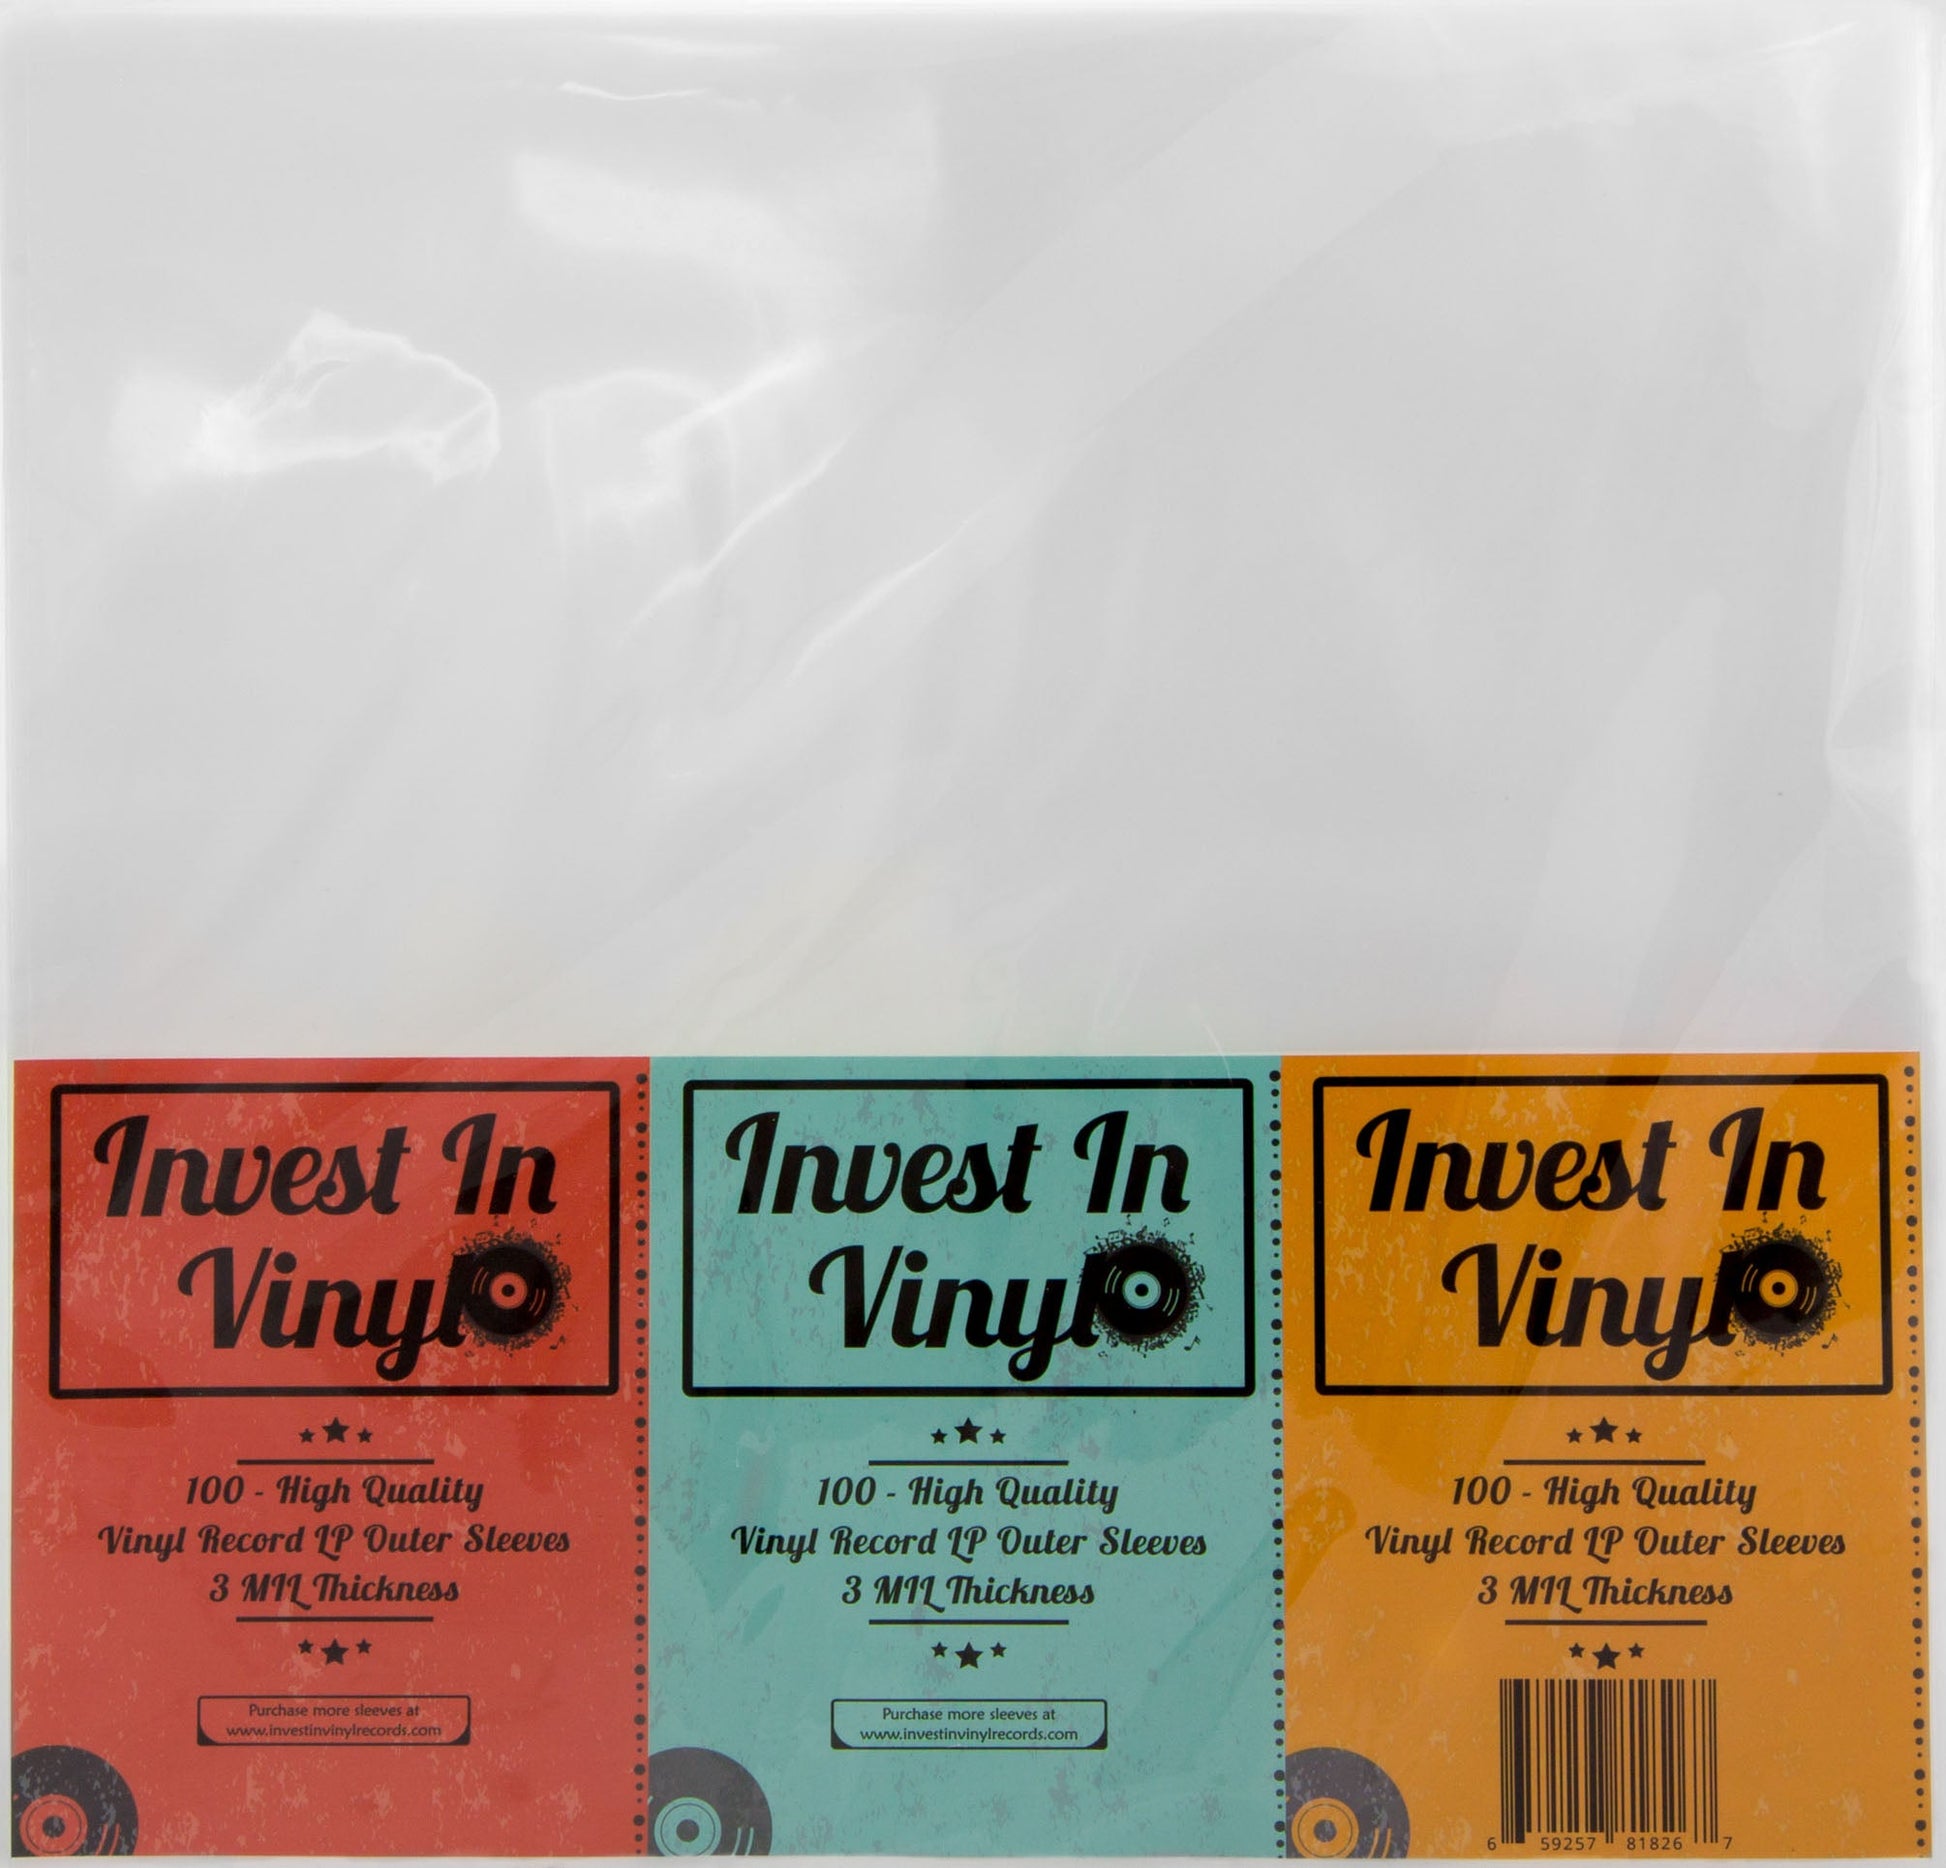 Invest In Vinyl - Fundas externas protectoras para vinilos – Viniel